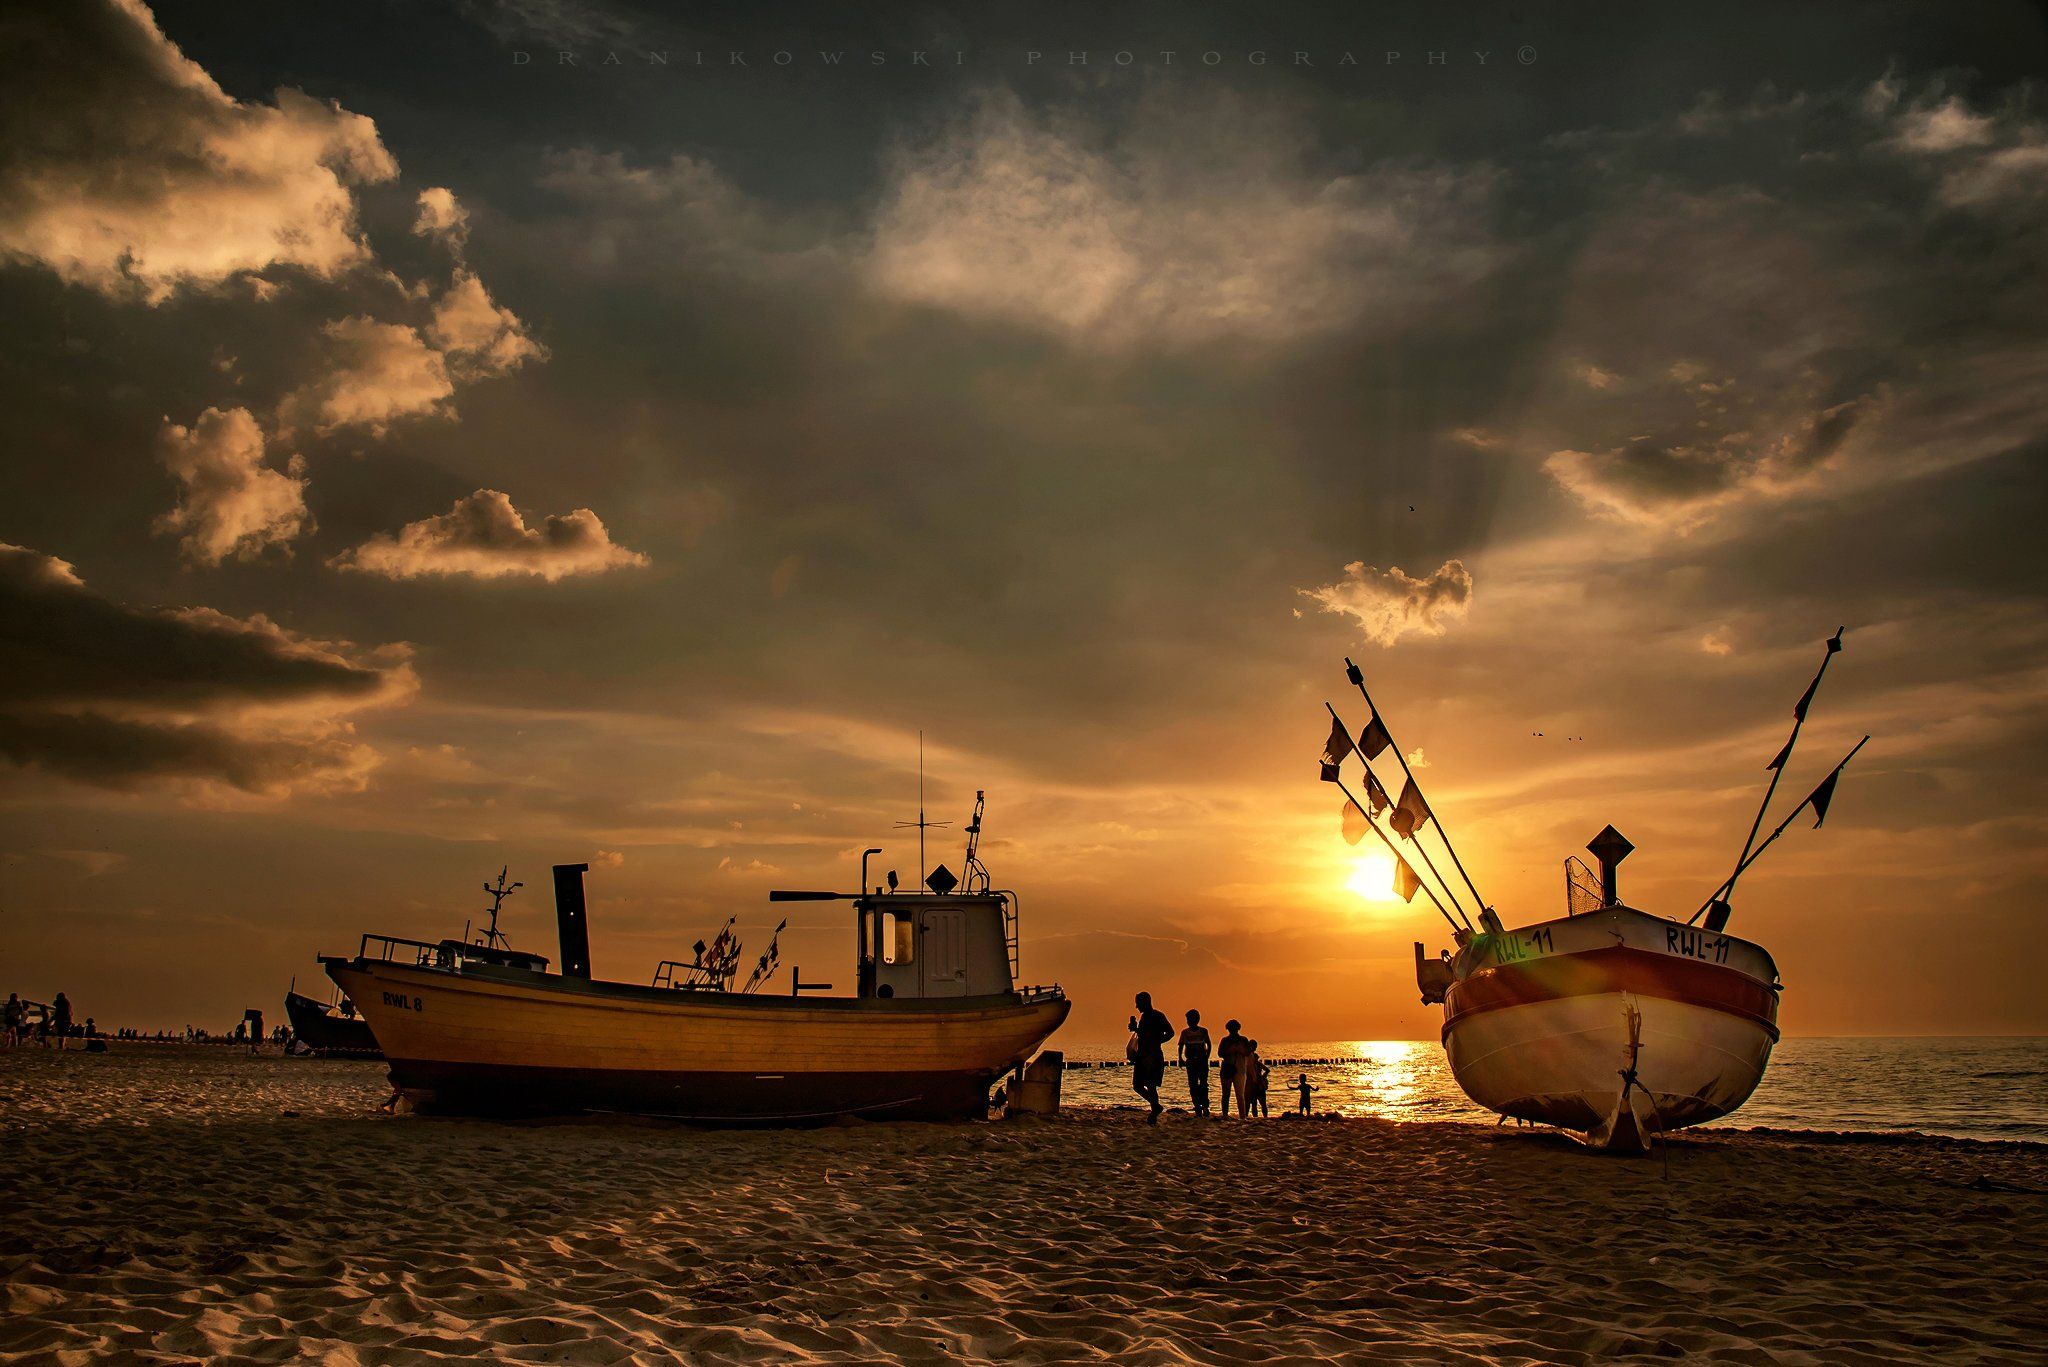 sun water baltic sea dranikowski boats sunlight clouds sand hot orange sunset, Radoslaw Dranikowski